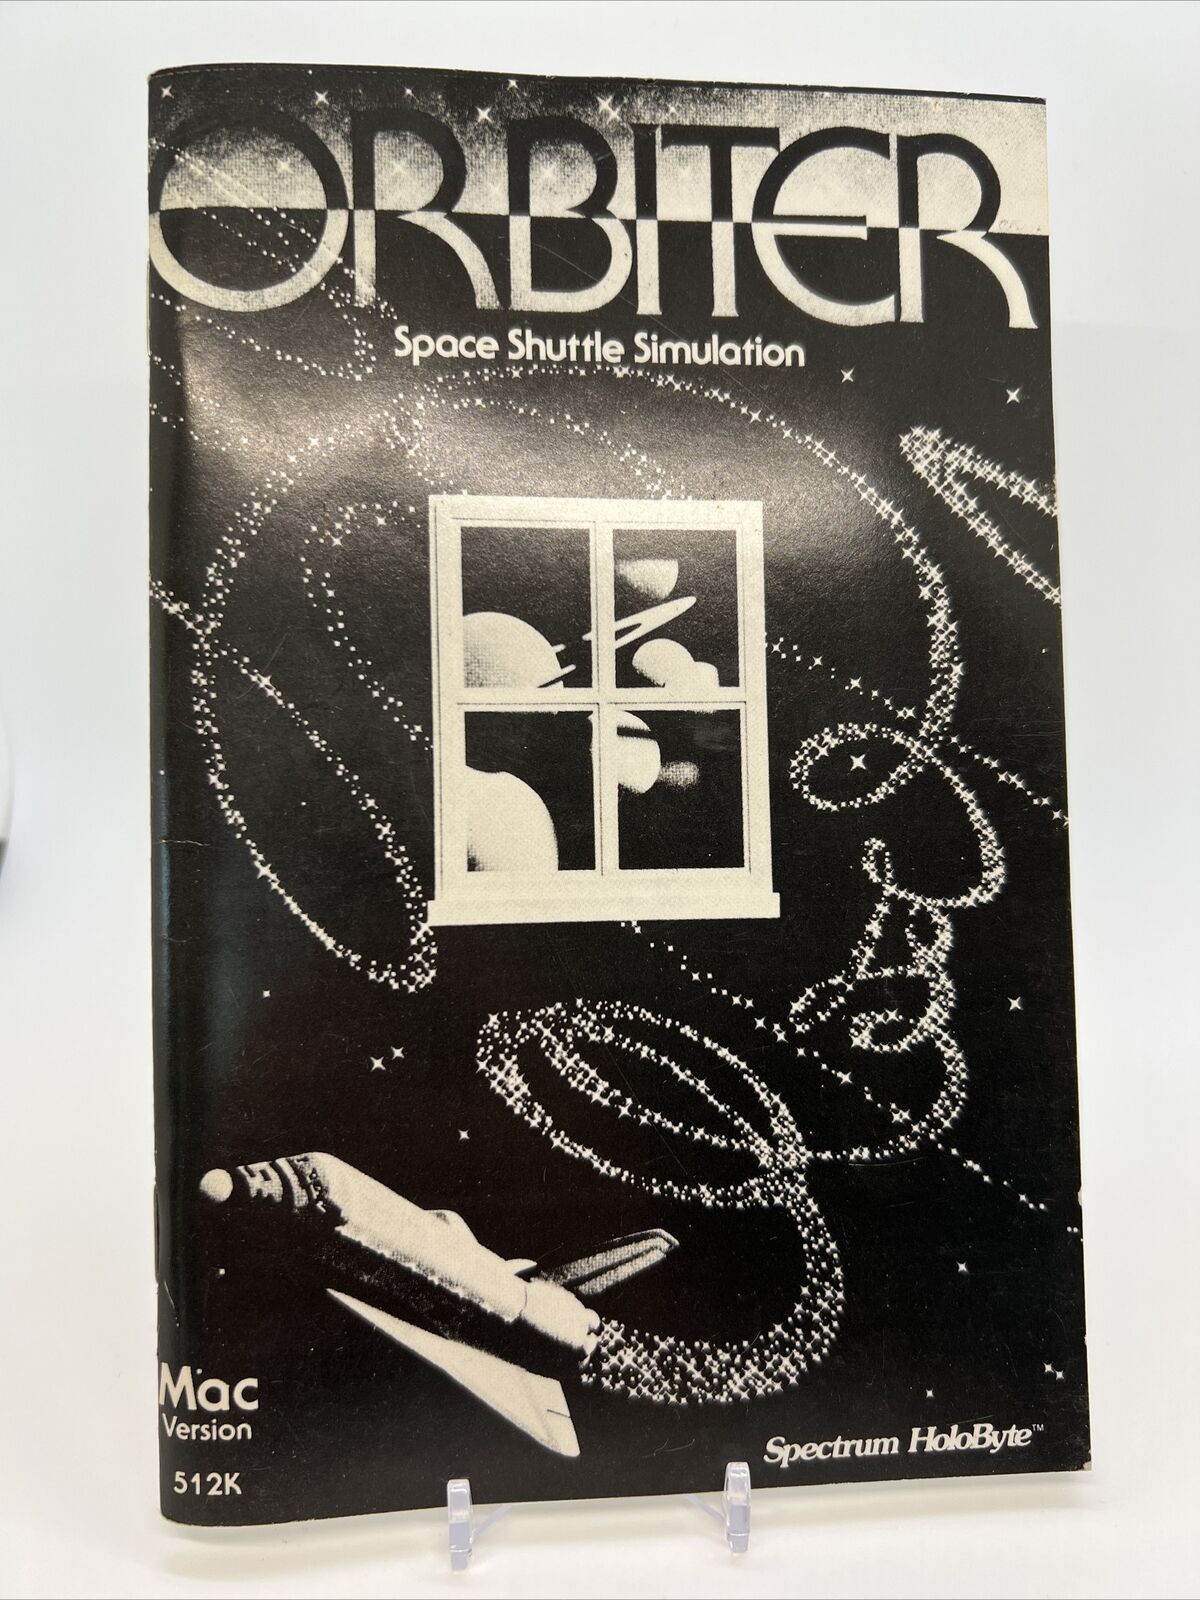 Orbiter Space Shuttle Simulation Atari ST- Mac Version -manual only 1986